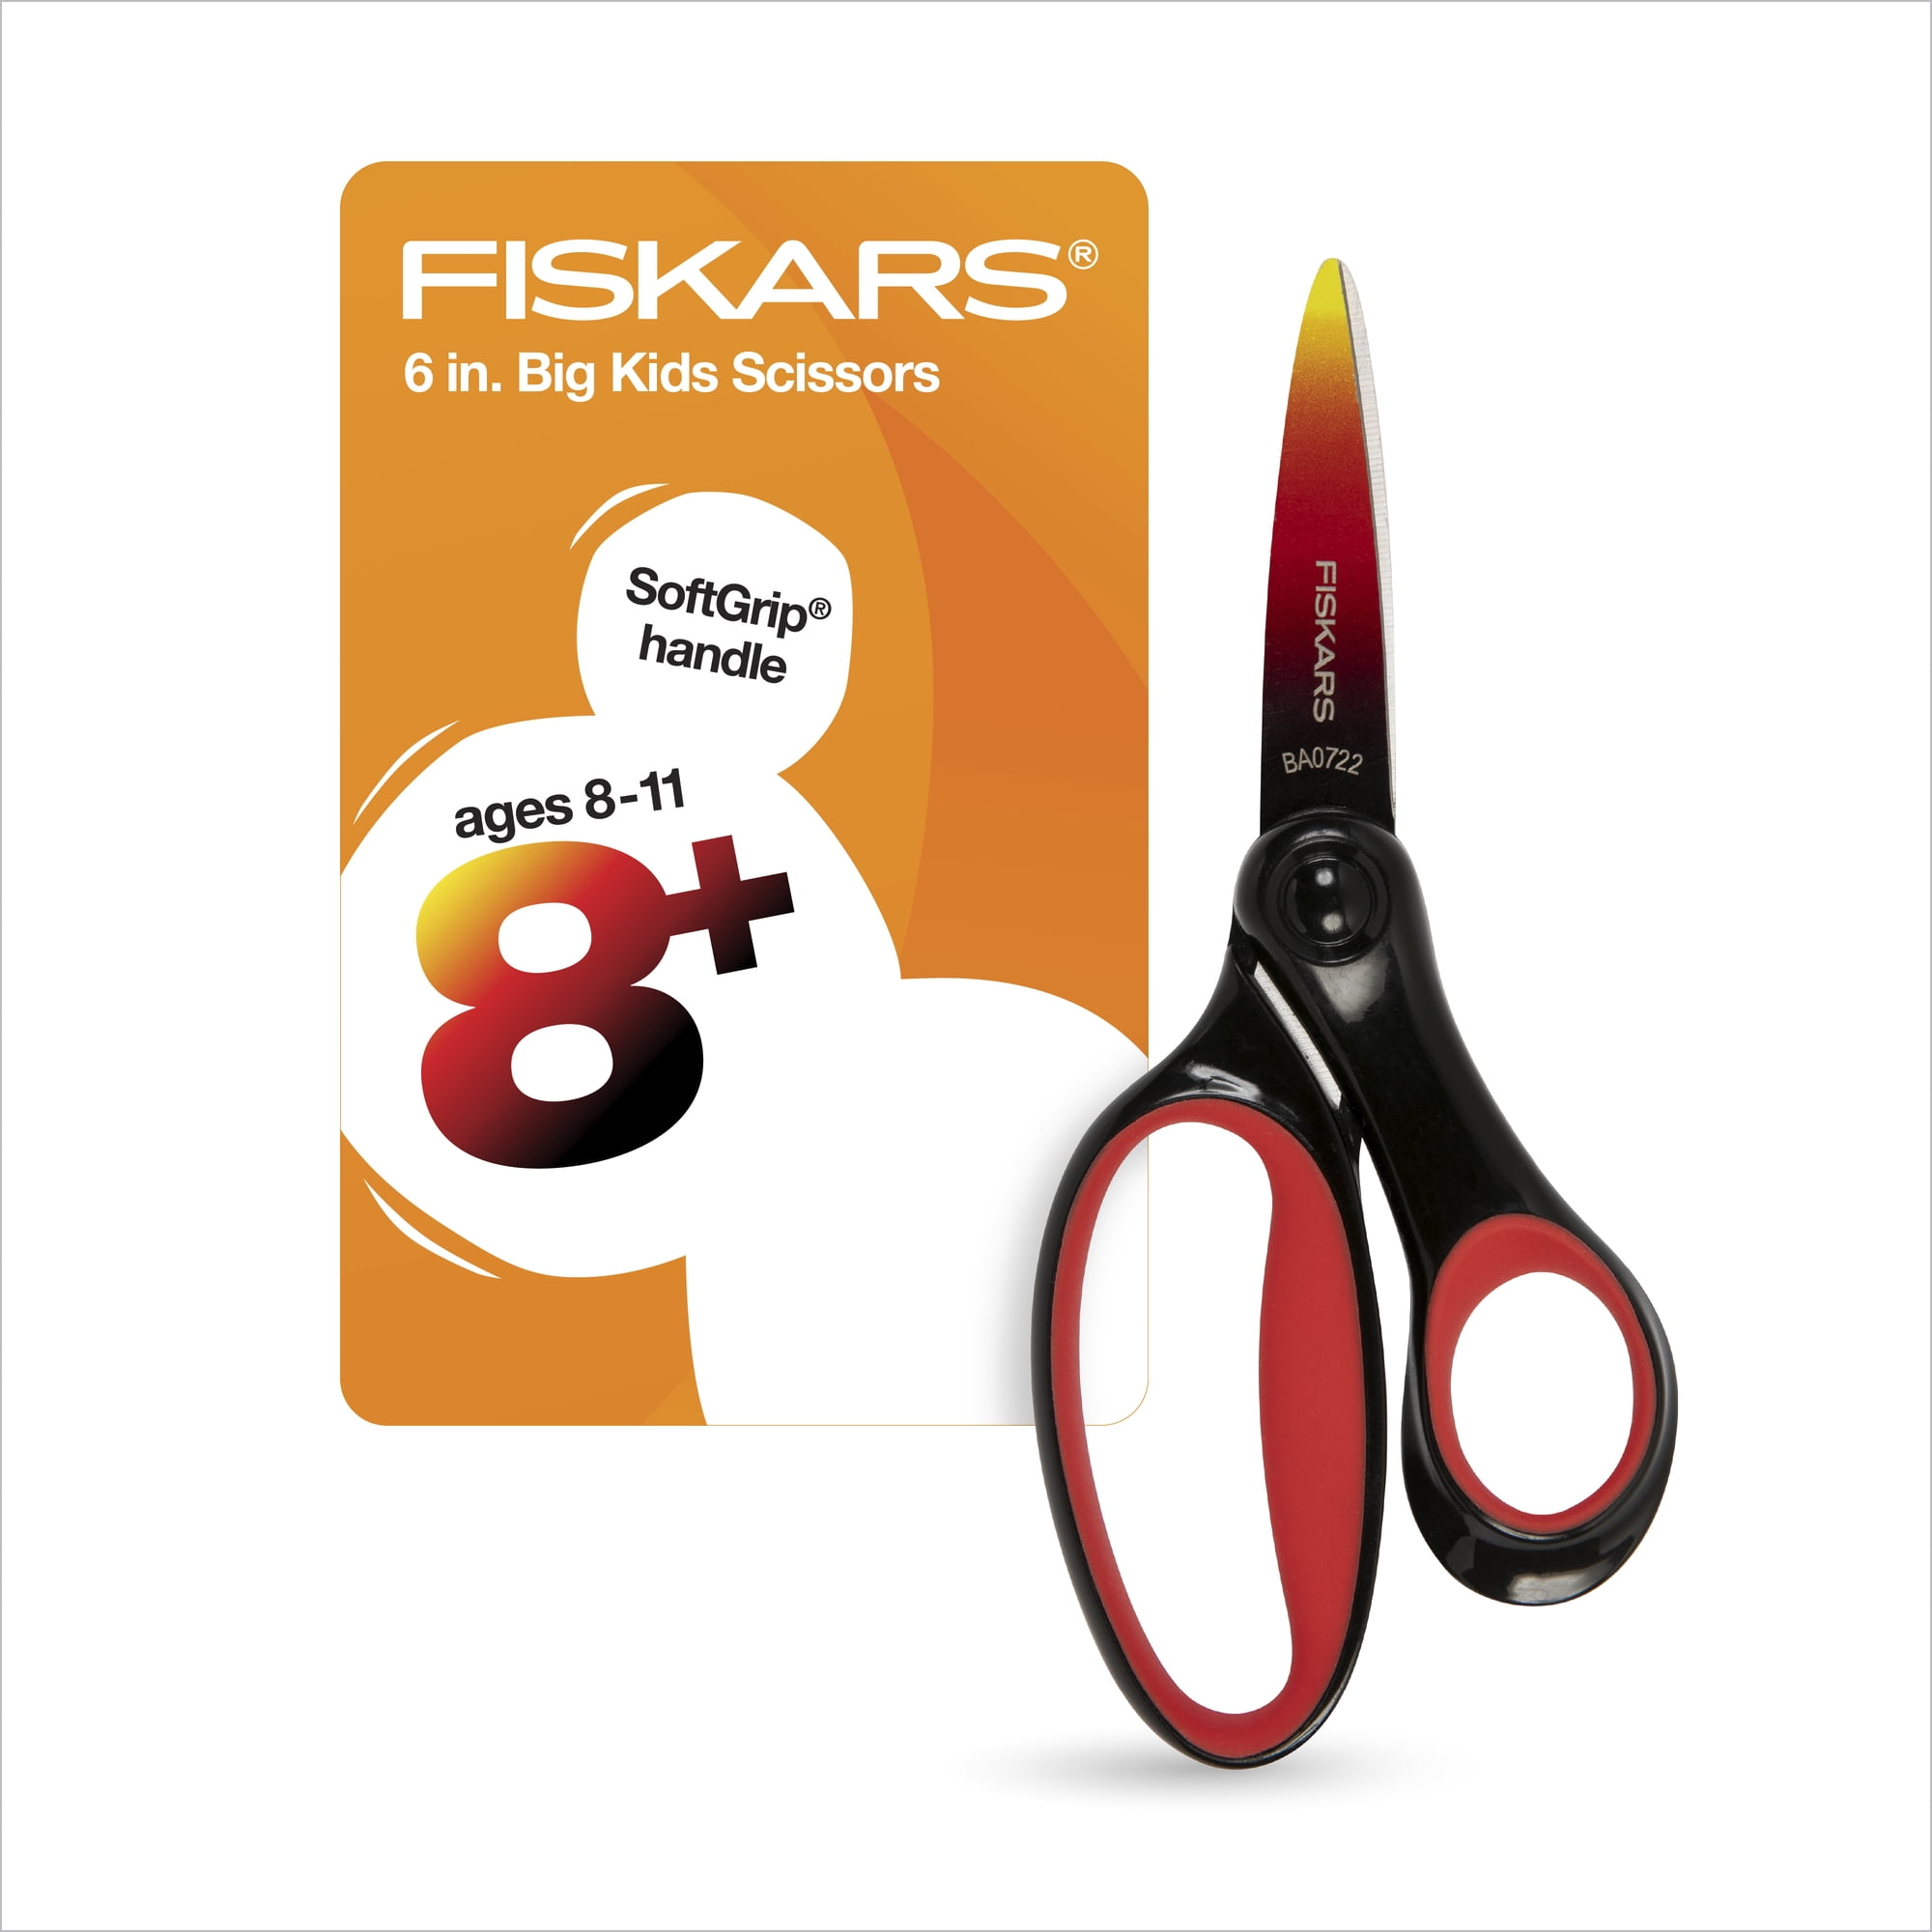 P3-304 Fiskars Curved Blade Scissors